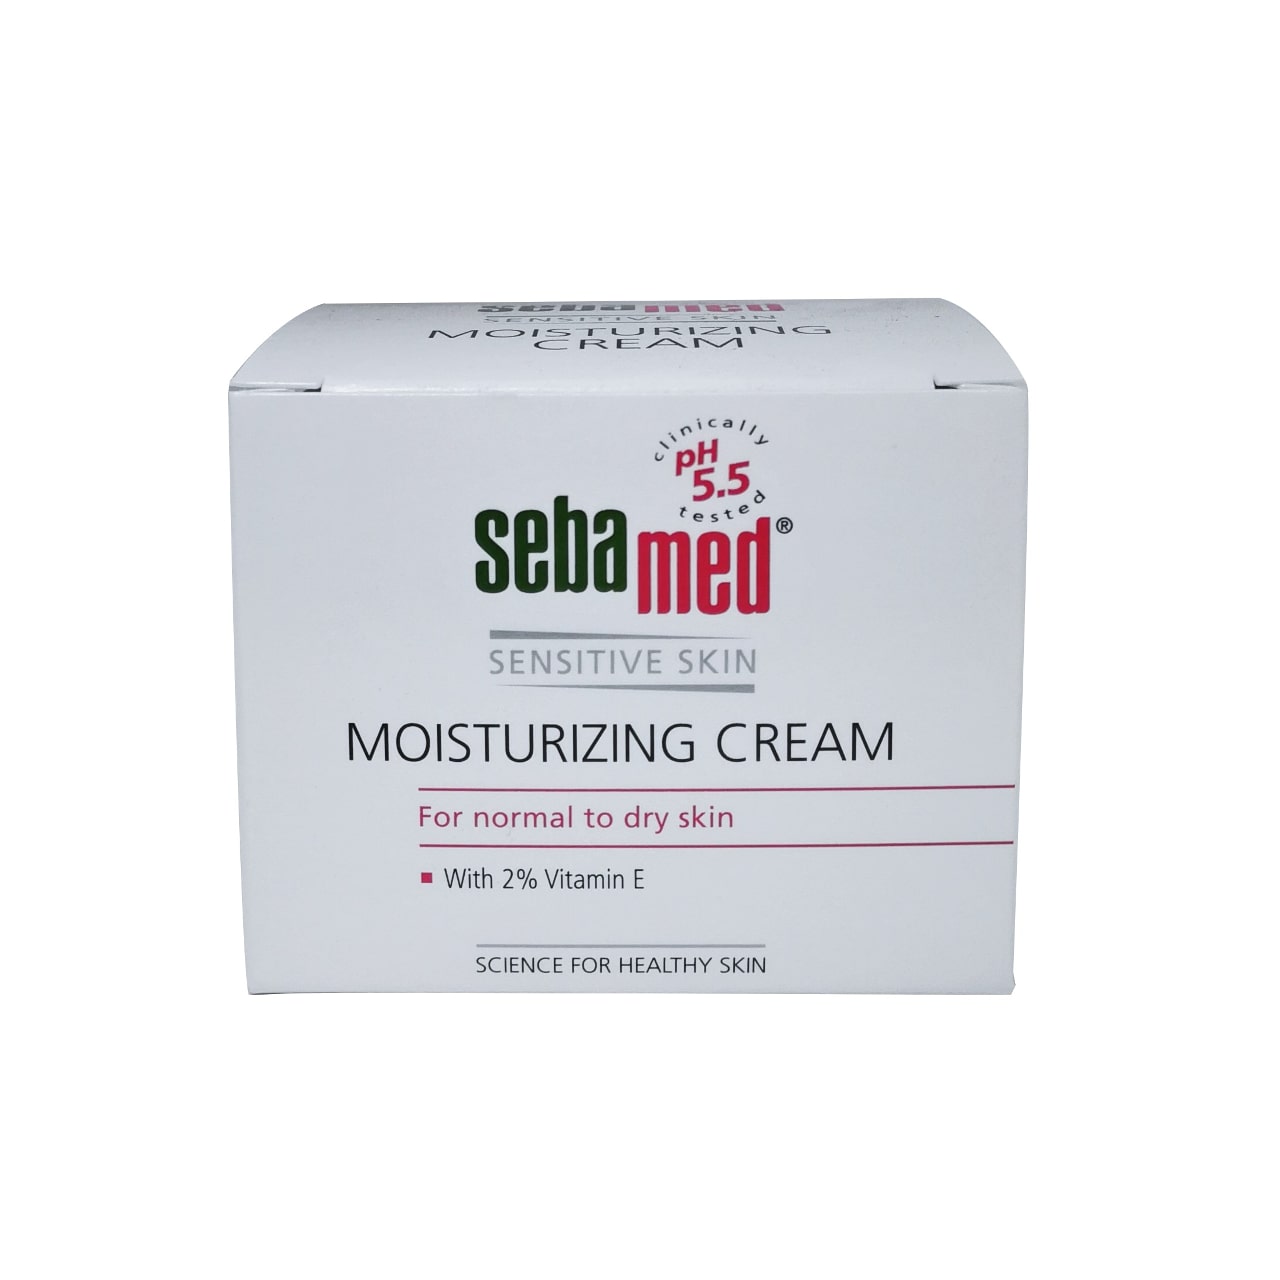 Product type for Sebamed Moisturizing Cream in English